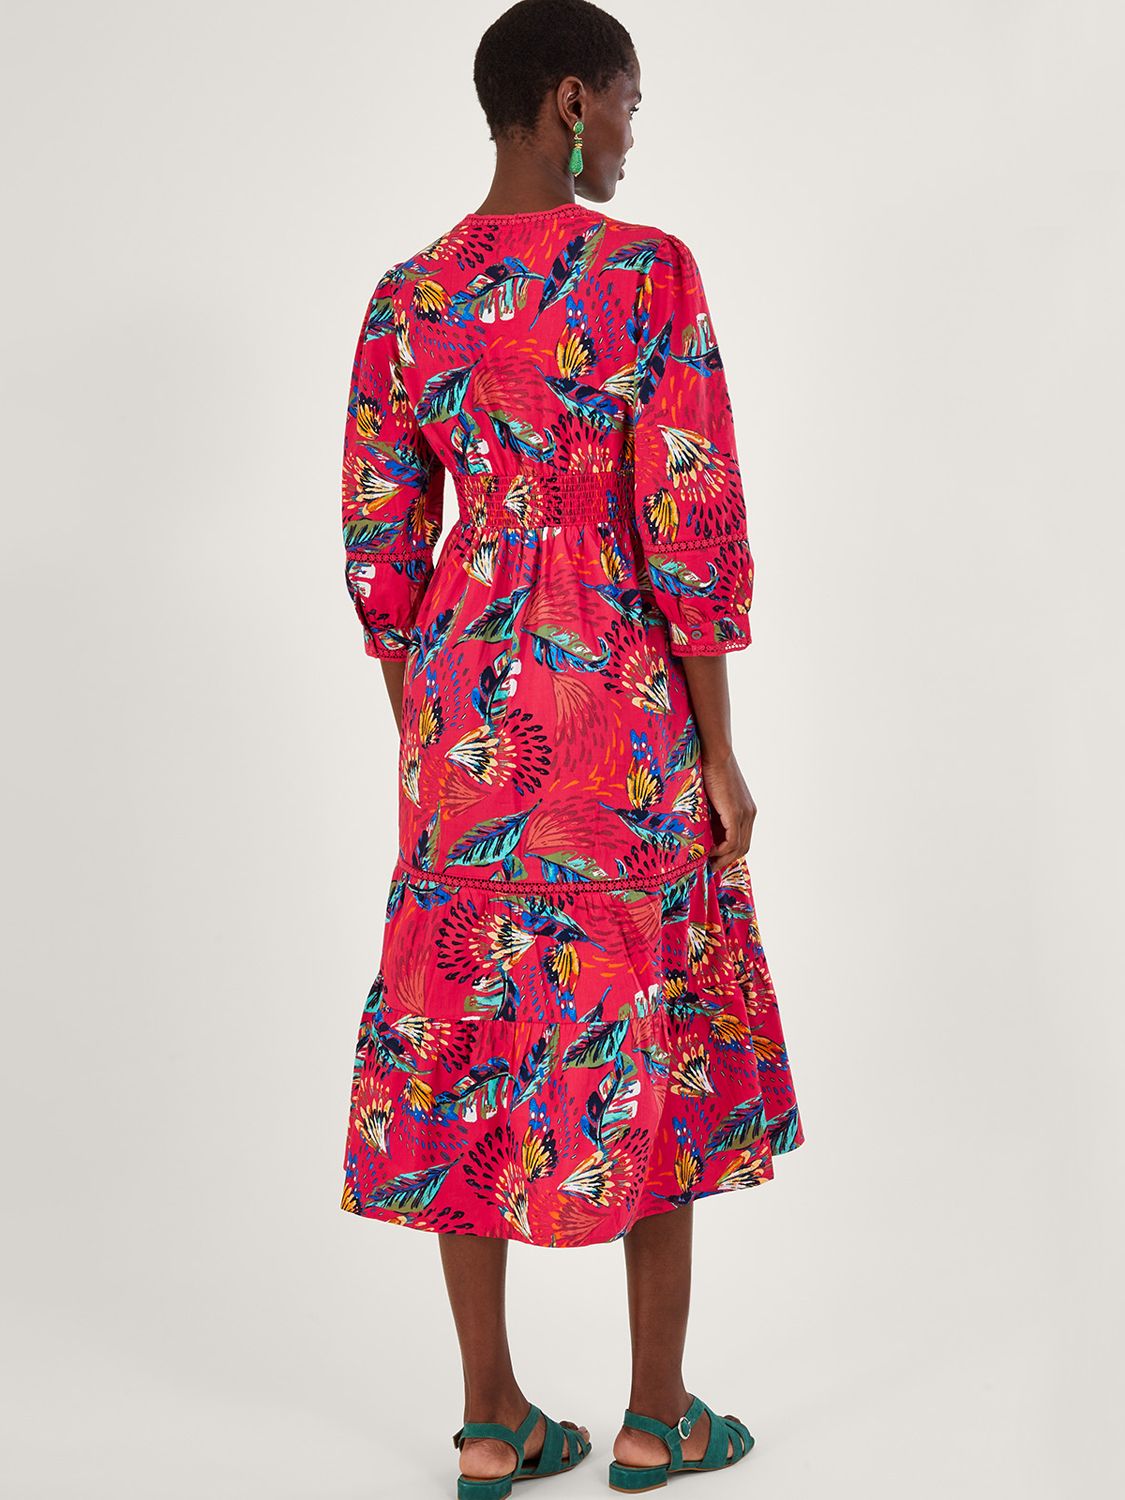 Monsoon Flavia Feather Print Midi Dress, Red/Multi at John Lewis & Partners